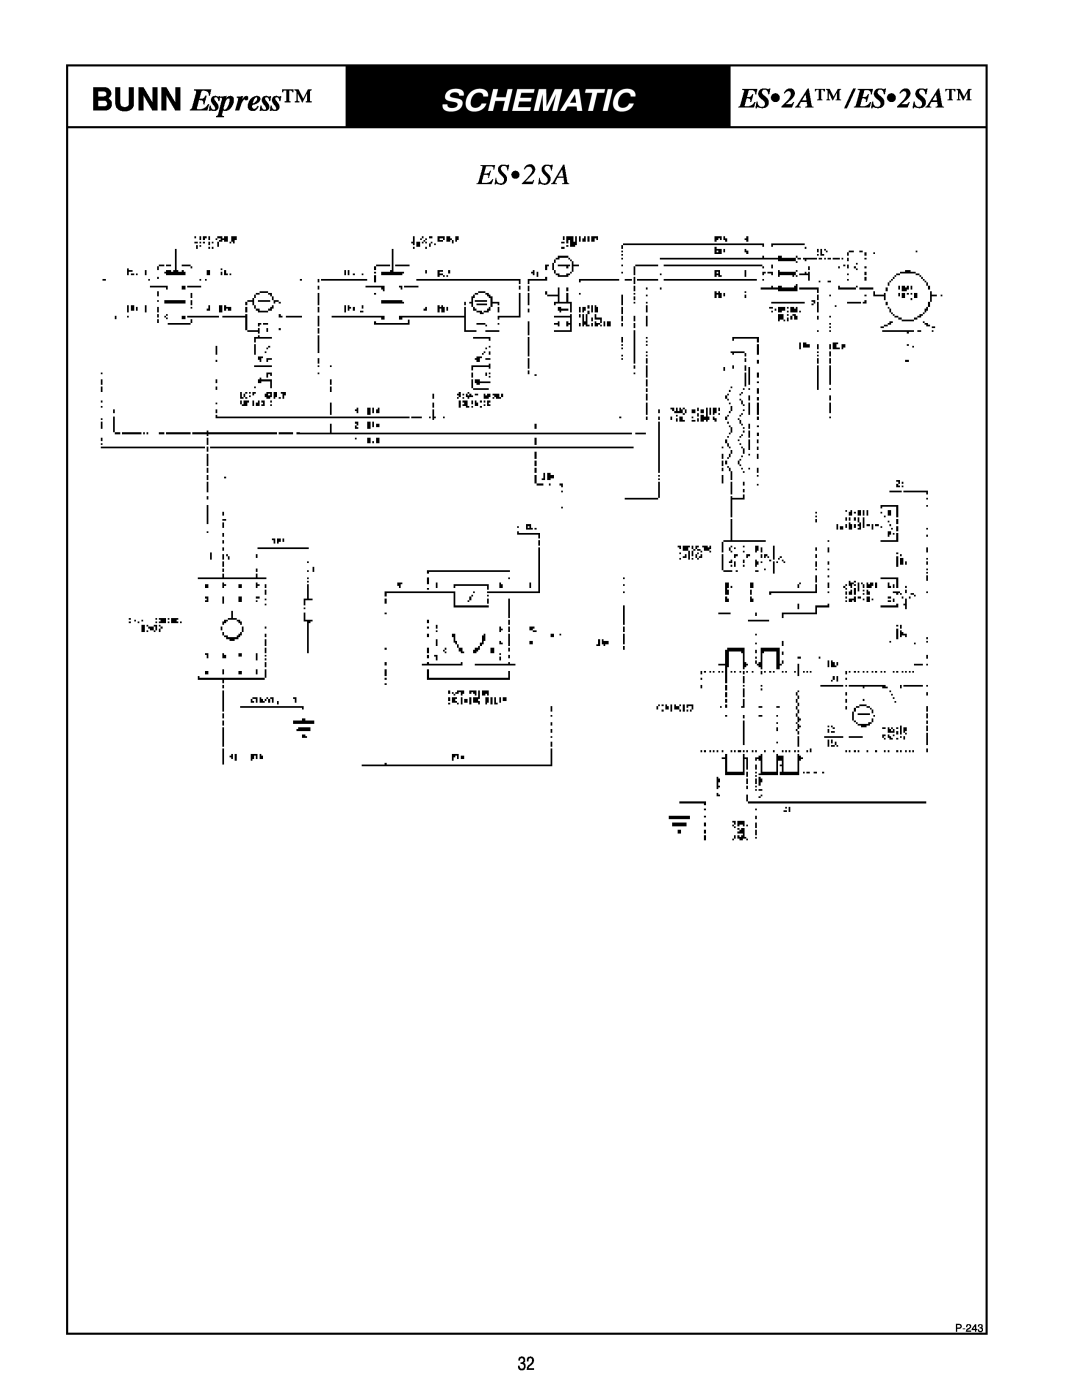 Bunn service manual Schematic, BUNN Espress, ES2A/ES2SA, P-243 